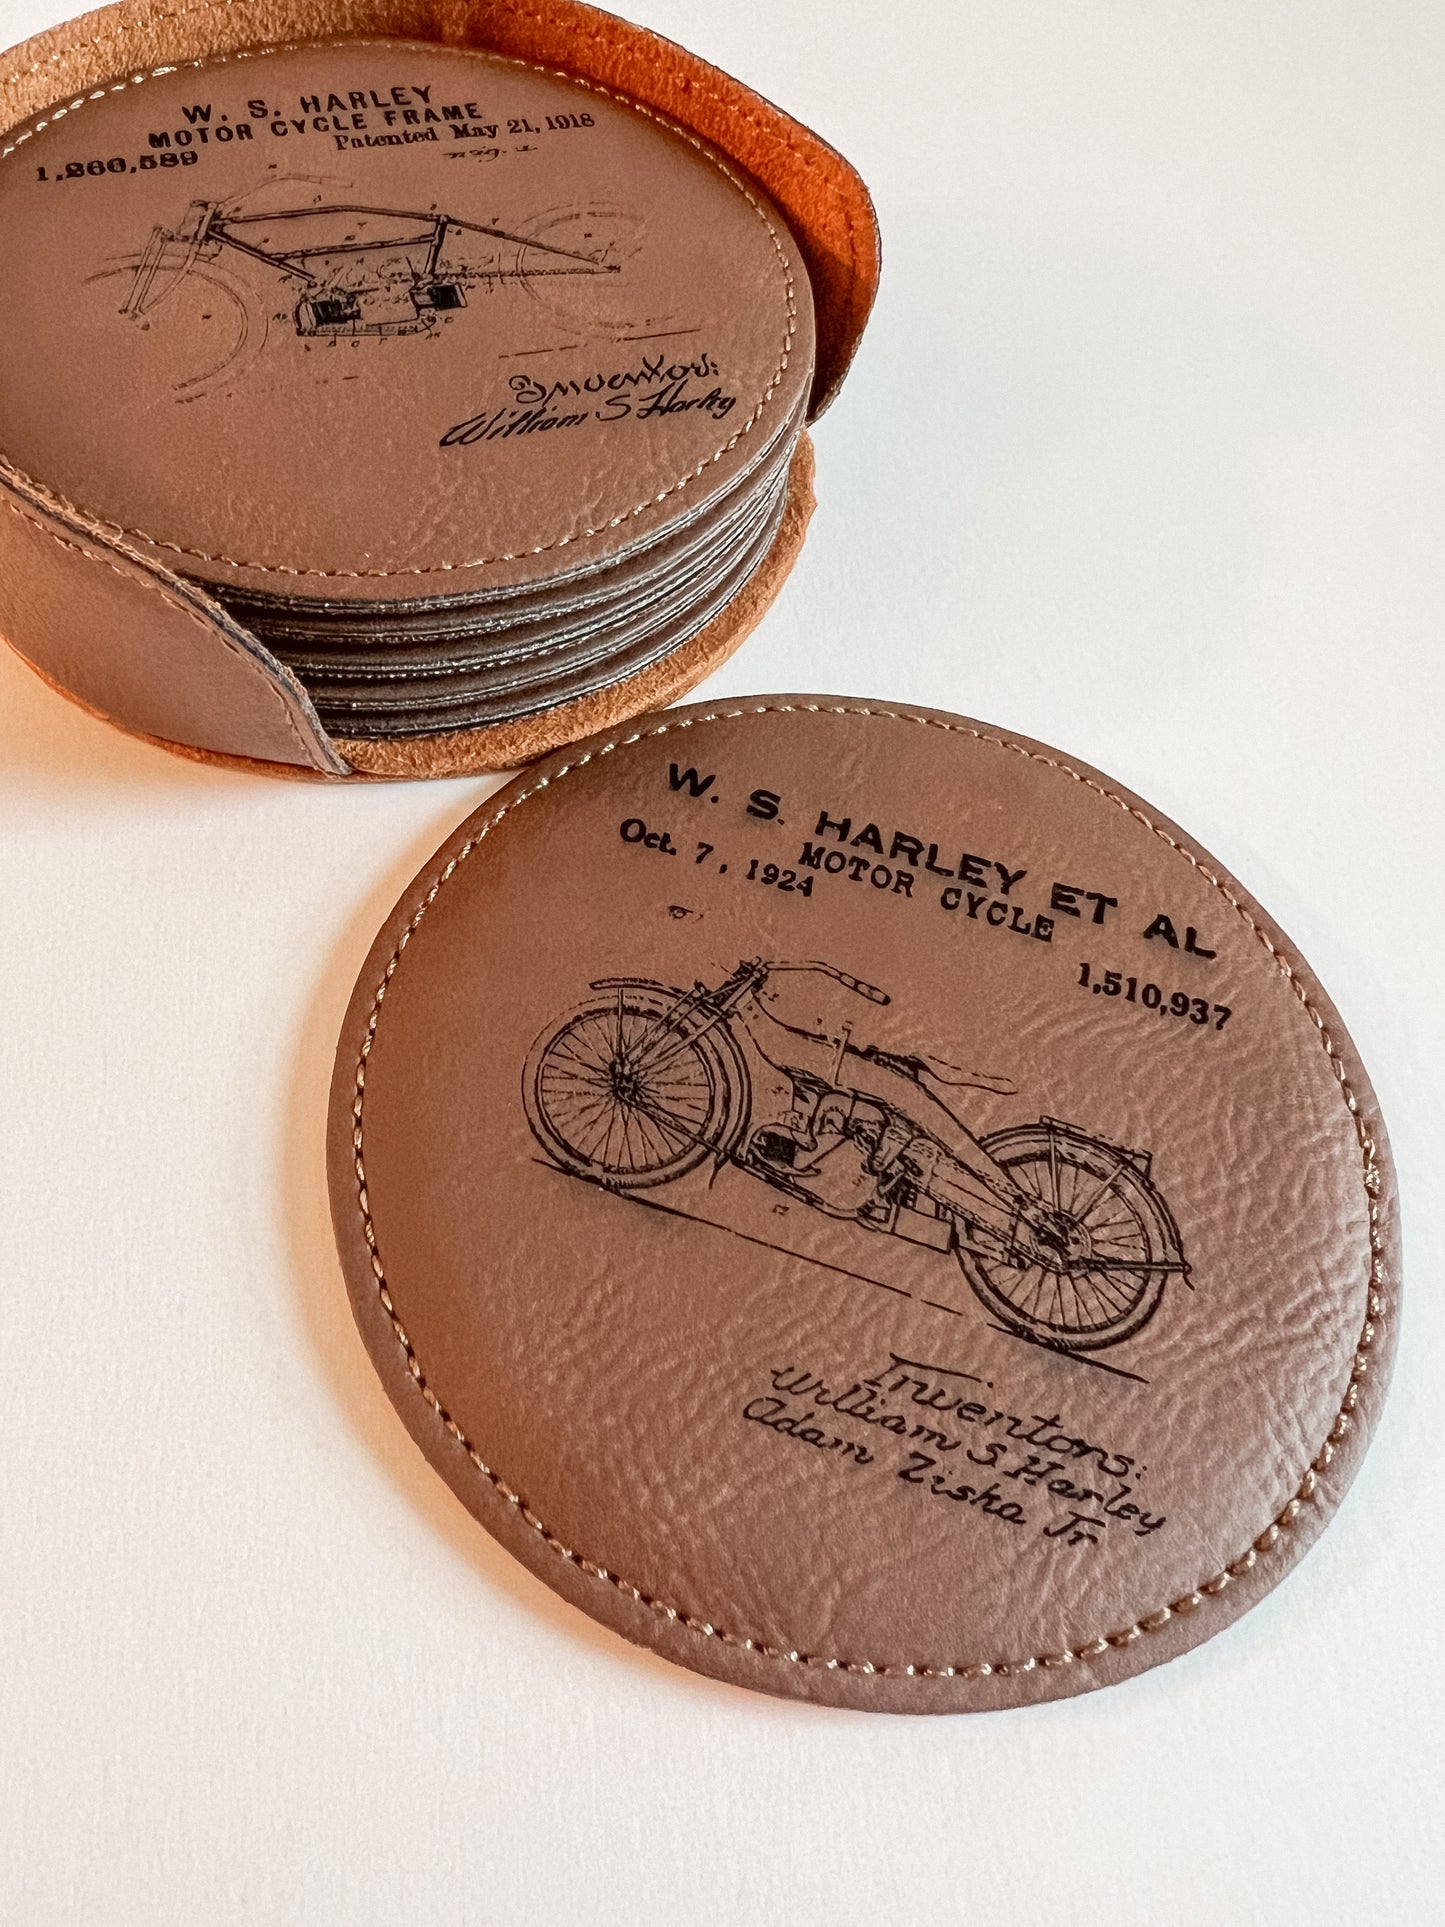 Harley Davidson Motorcycle Patent Coasters // Set of 6 Coasters // Leather Coasters // Harley Motorcycle // Motorcycle Decor